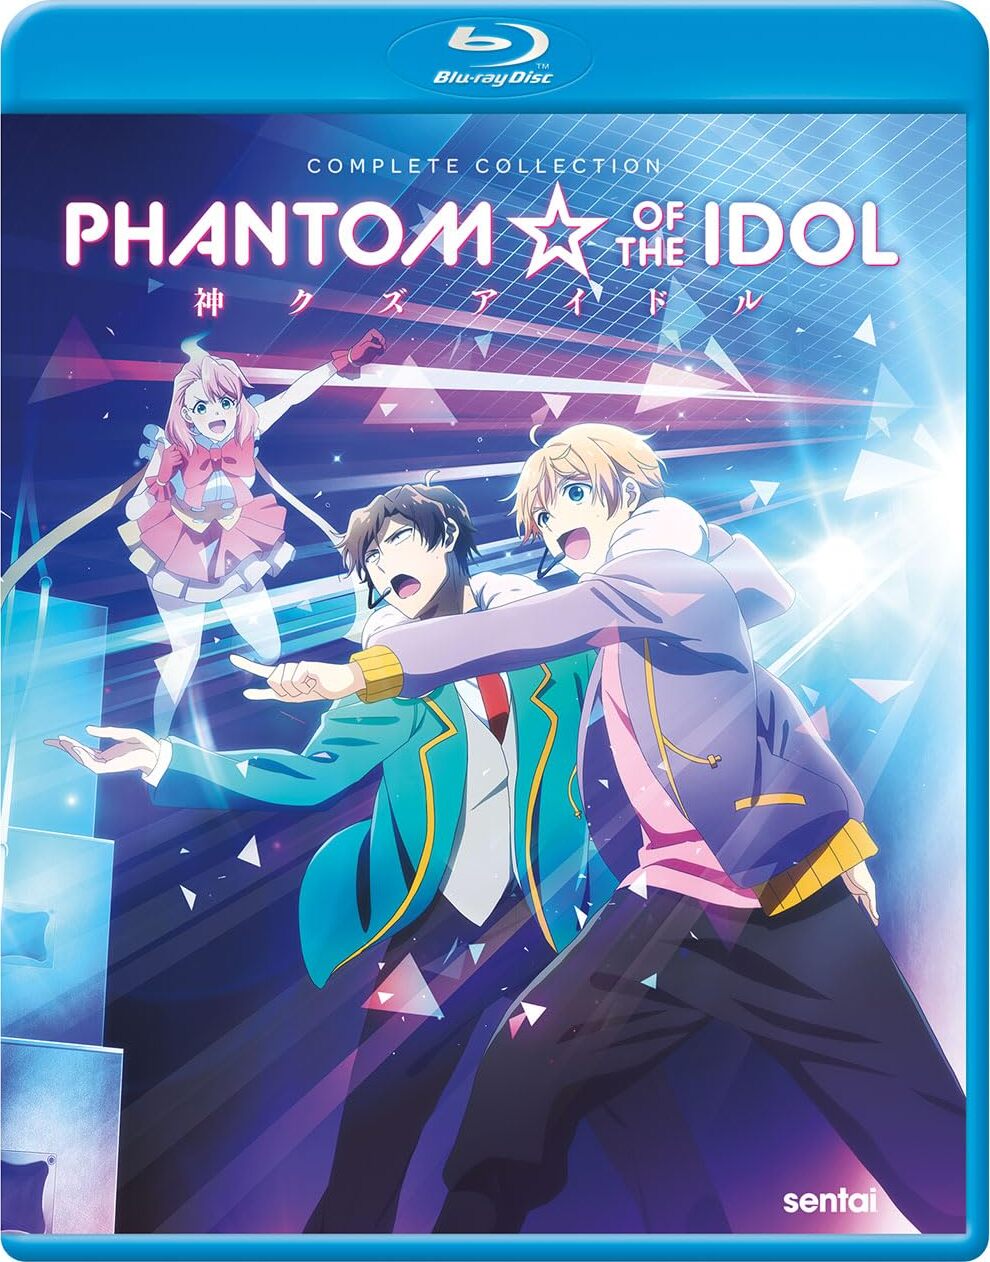 Paranormal Comedy Series “Phantom of the Idol” Joins Sentai's